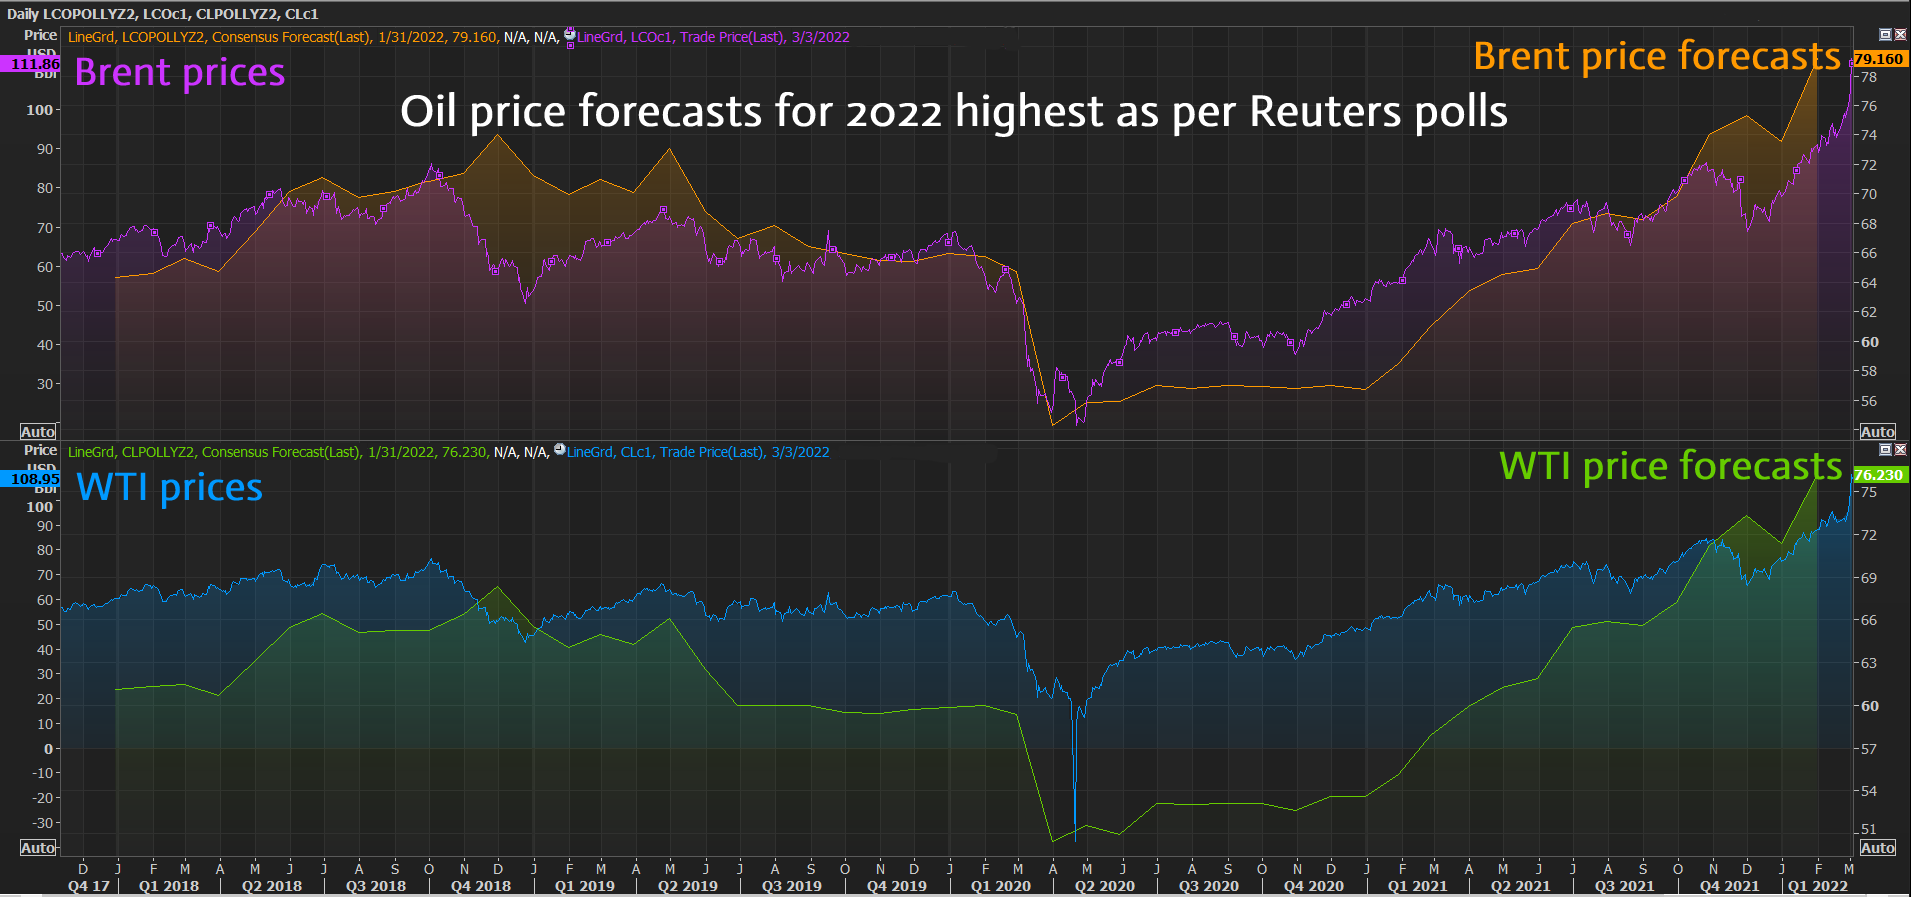 Oil price forecasts